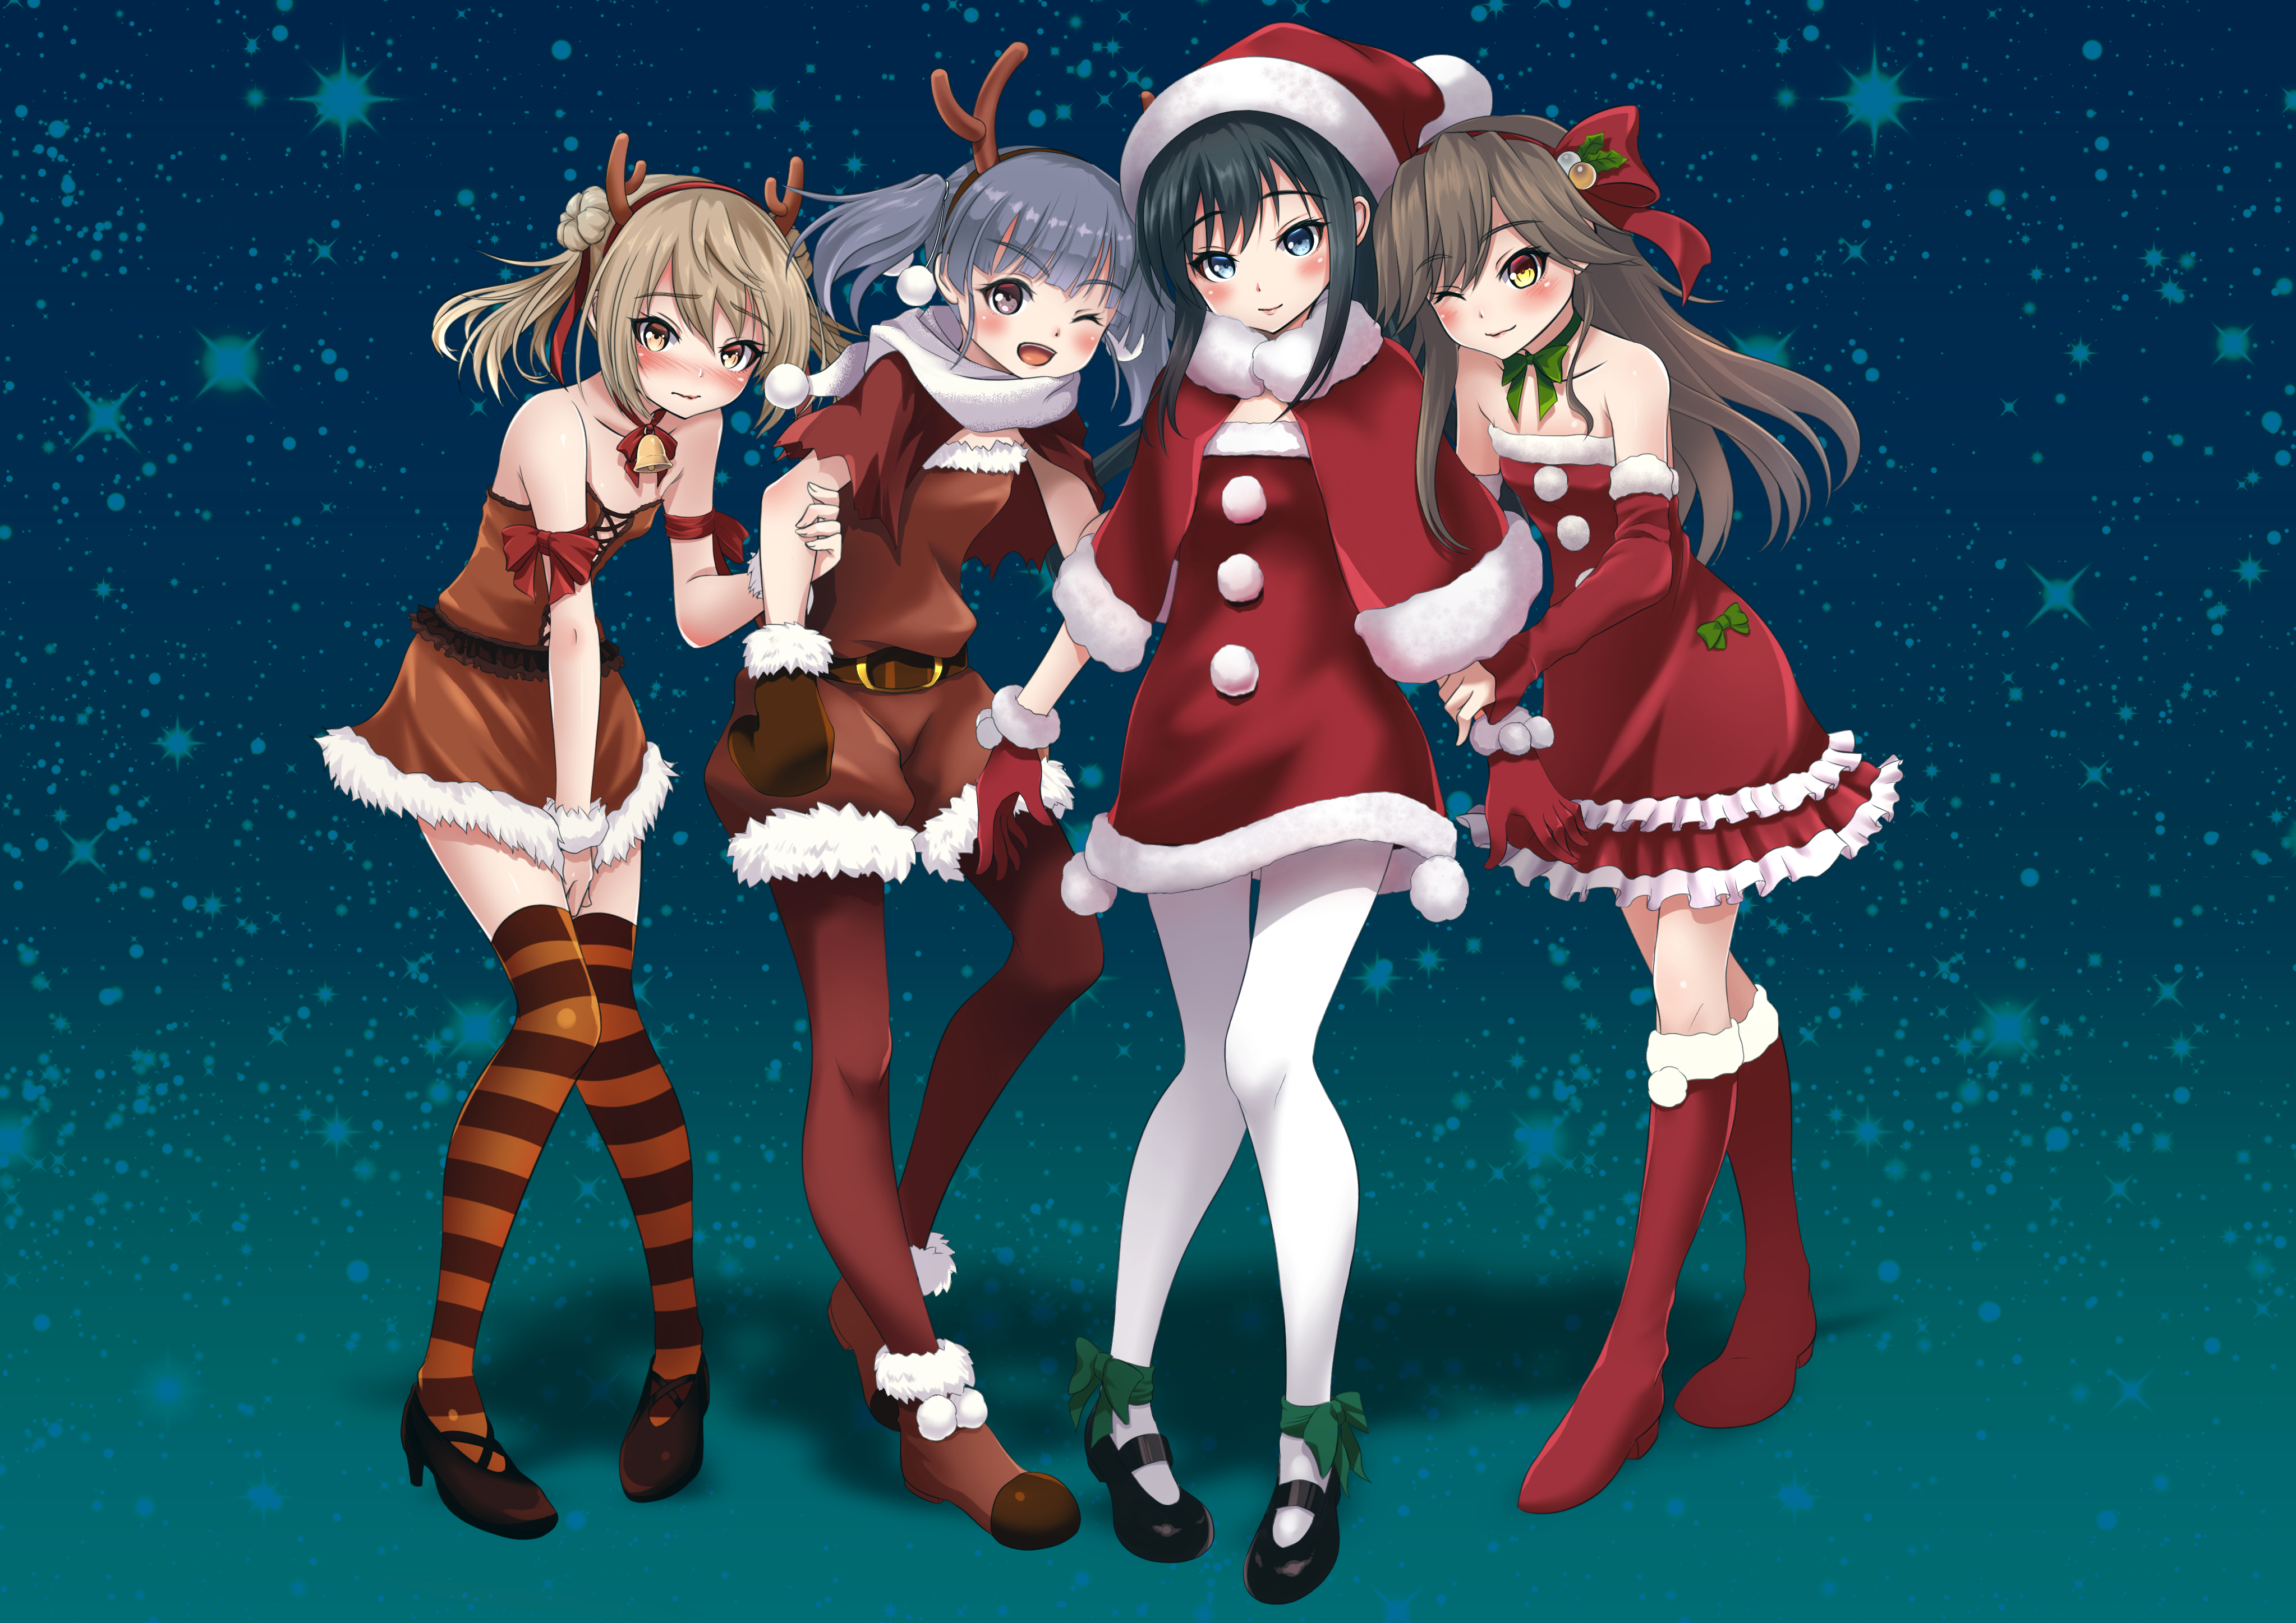 Anime 4093x2894 anime anime girls Kantai Collection Asashio (kancolle) Ooshio (kancolle) Michishio (KanColle) Arashio (KanColle) long hair twintails black hair blue hair brunette group of women artwork digital art fan art Christmas clothes Santa hats